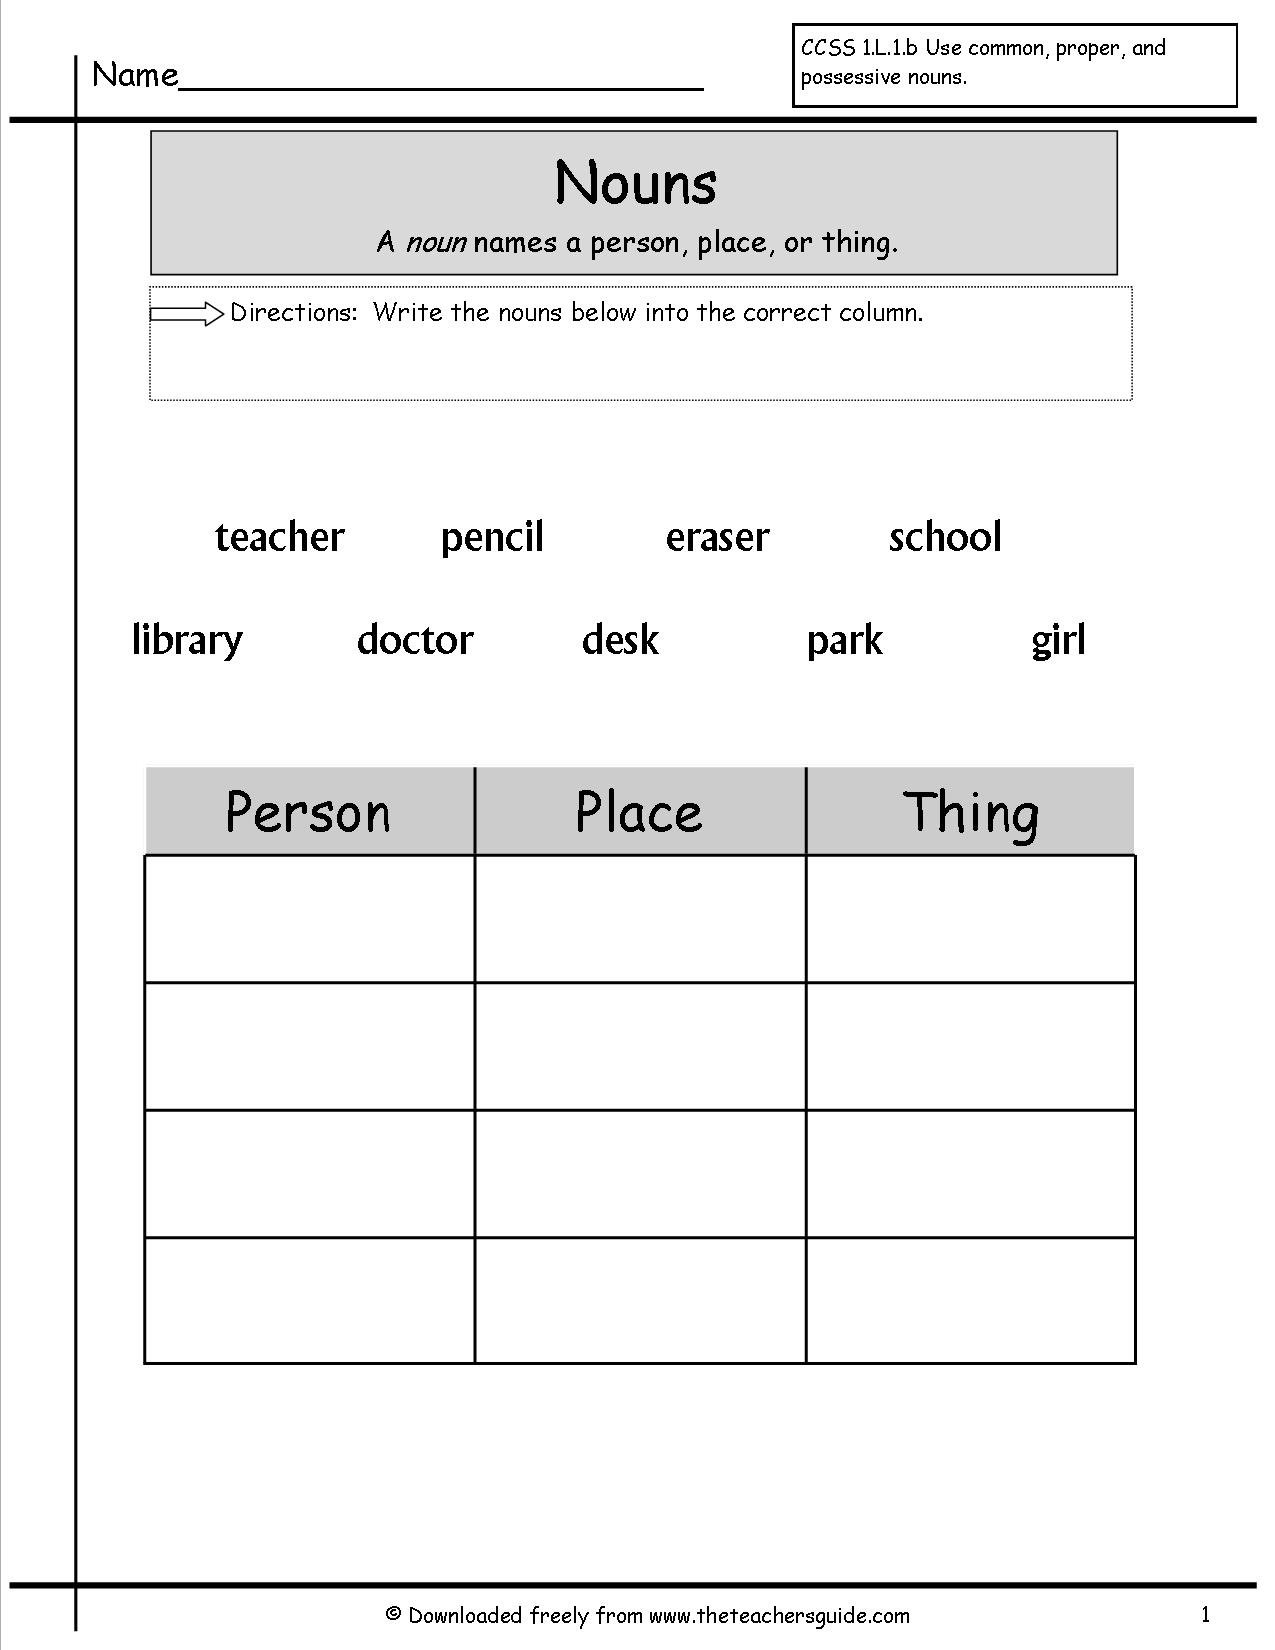 Nouns Worksheets From The Teacher's Guide For Noun Worksheets For Kindergarten